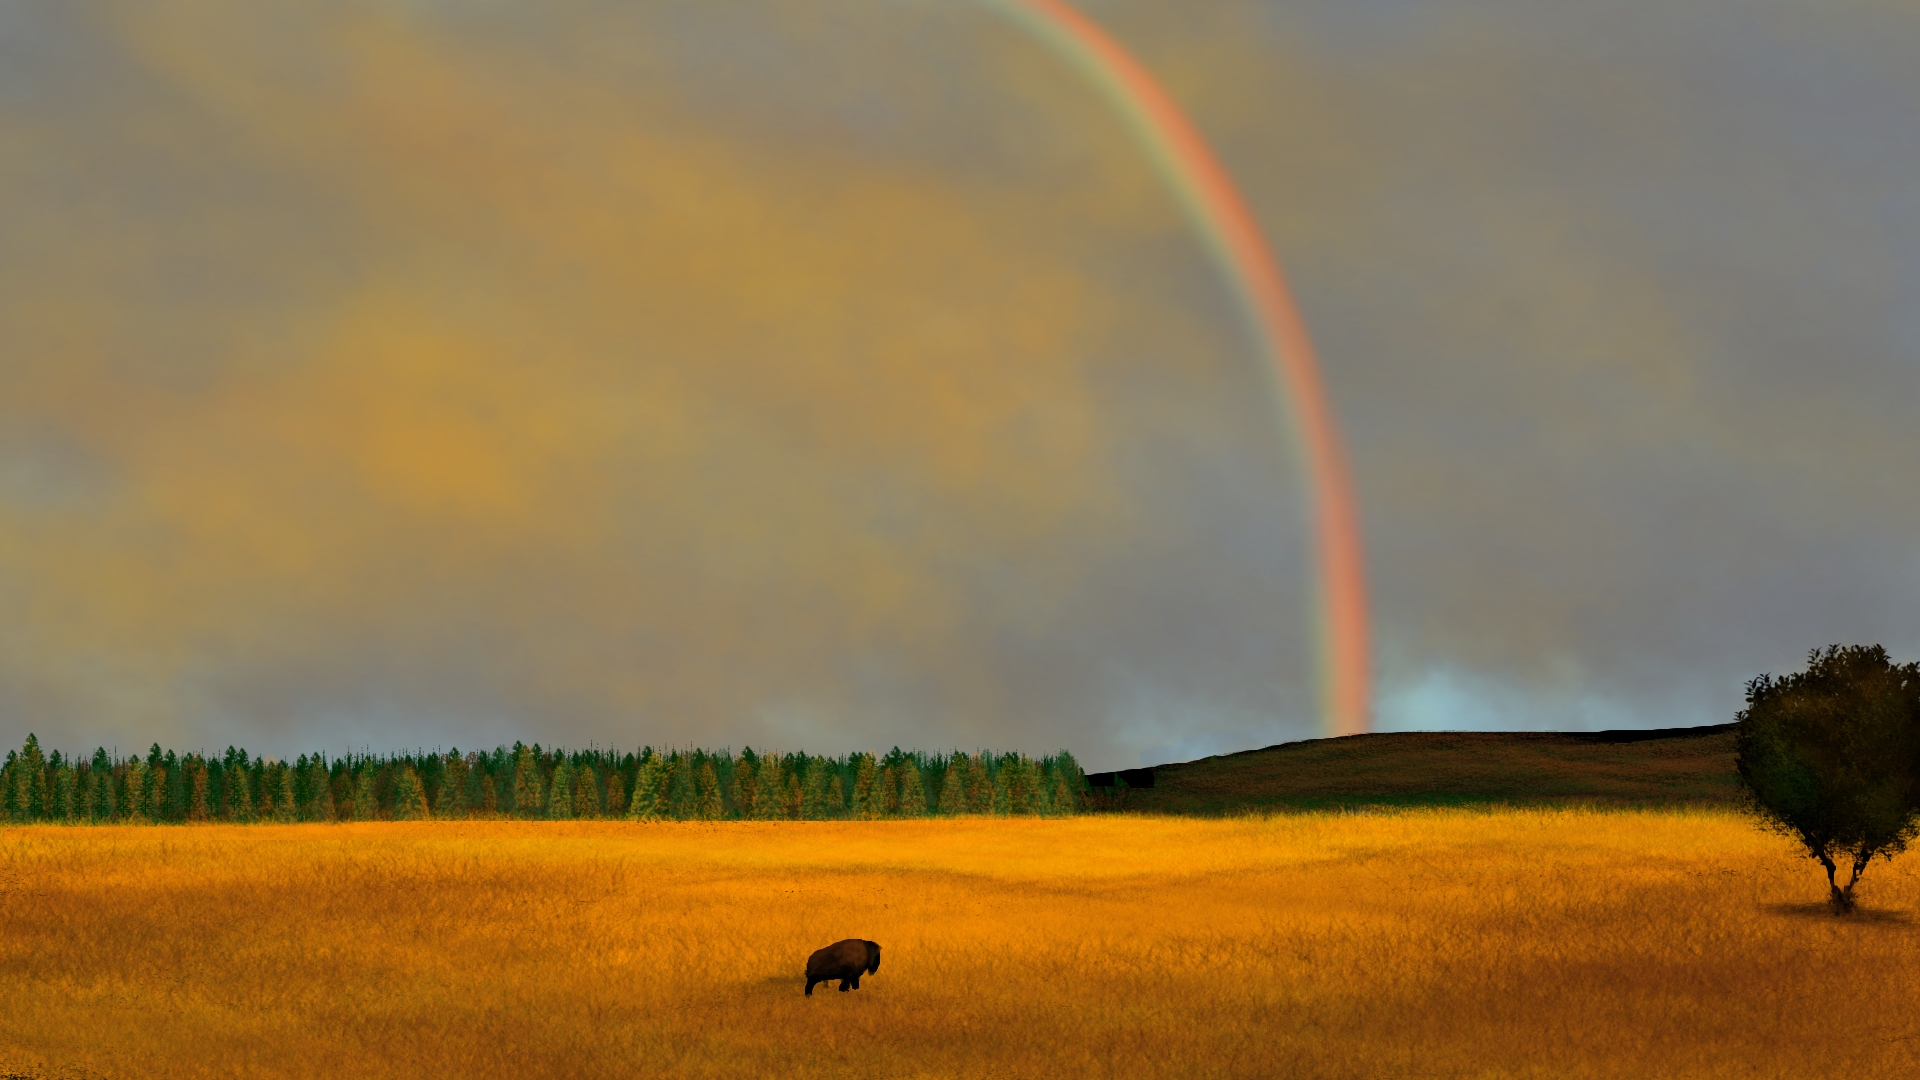 Digital Painting Digital Art Nature Landscape Buffalo Rainbows Trees Animals Field 1920x1080